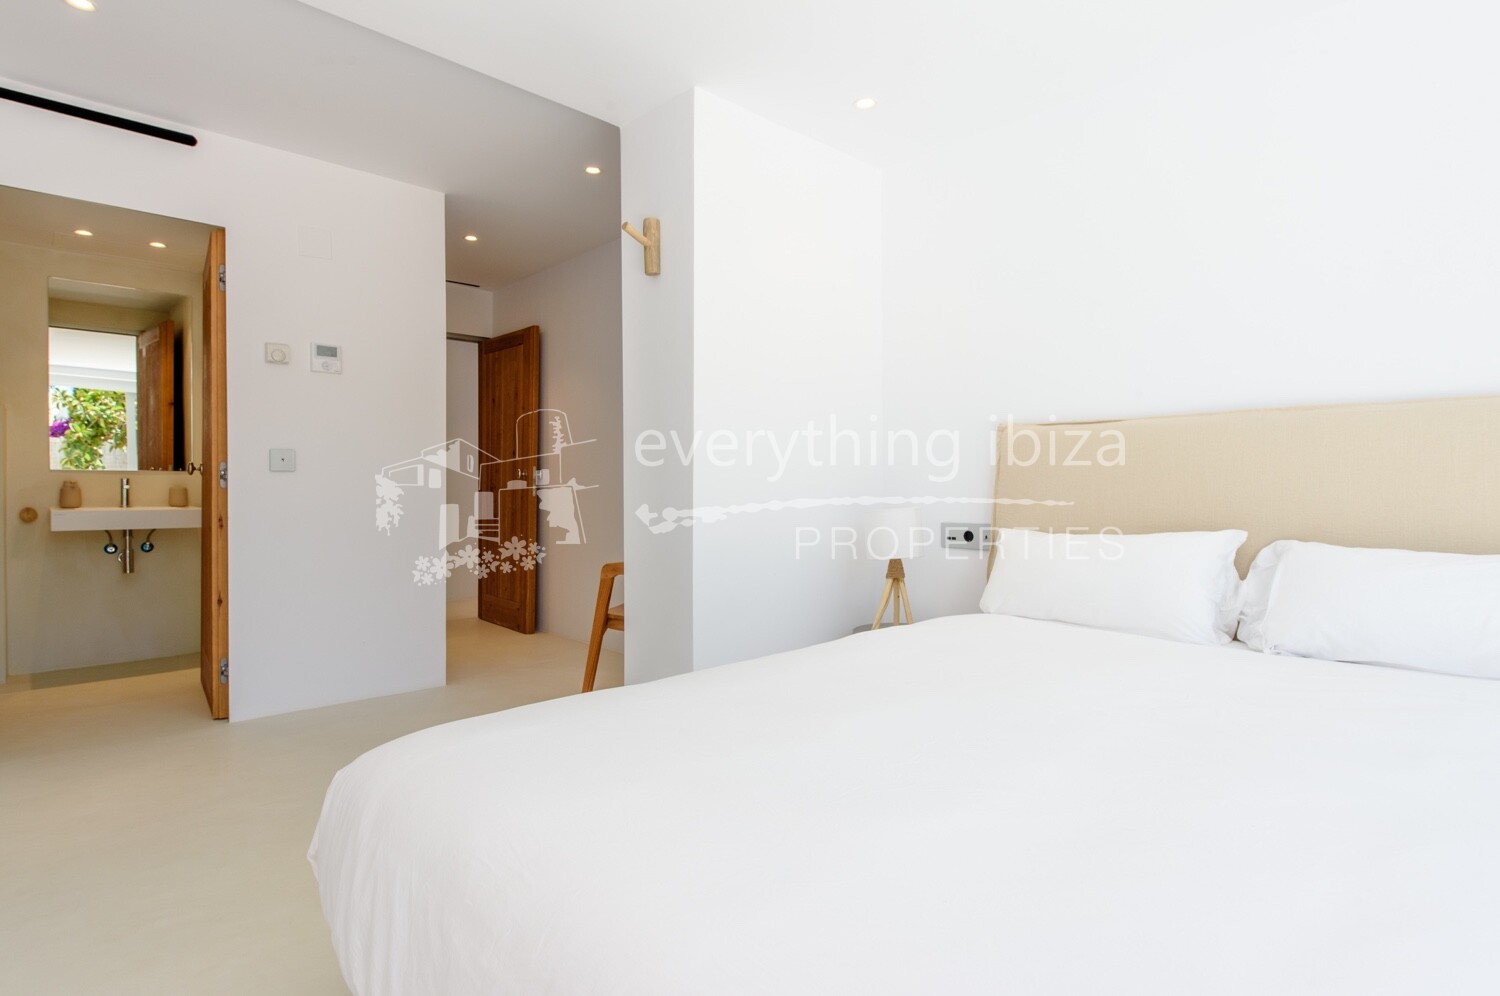 Beautiful Luxury Villa Close to Ibiza Town & Talamanca Bay, ref. 1500, for sale in Ibiza by everything ibiza Properties